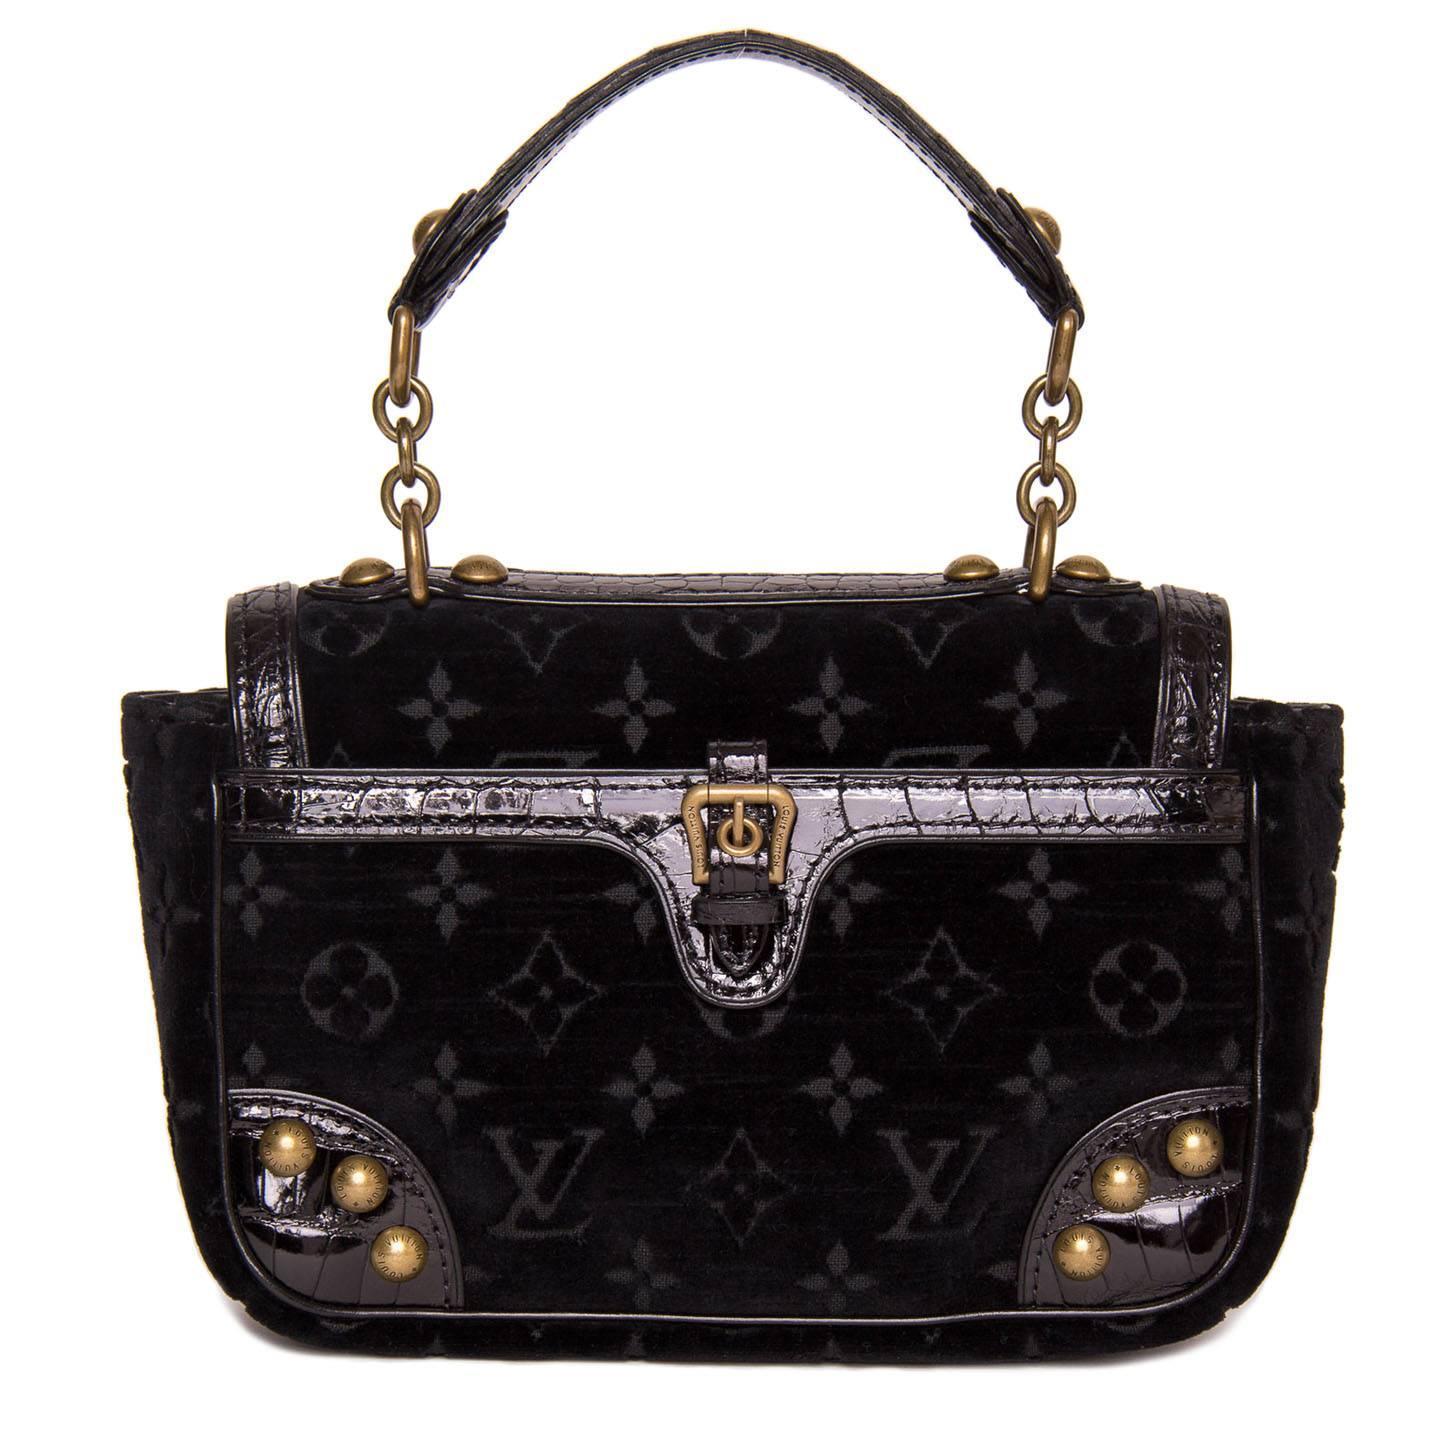 Louis Vuitton Black Velvet and Crocodile Small Bag at 1stdibs